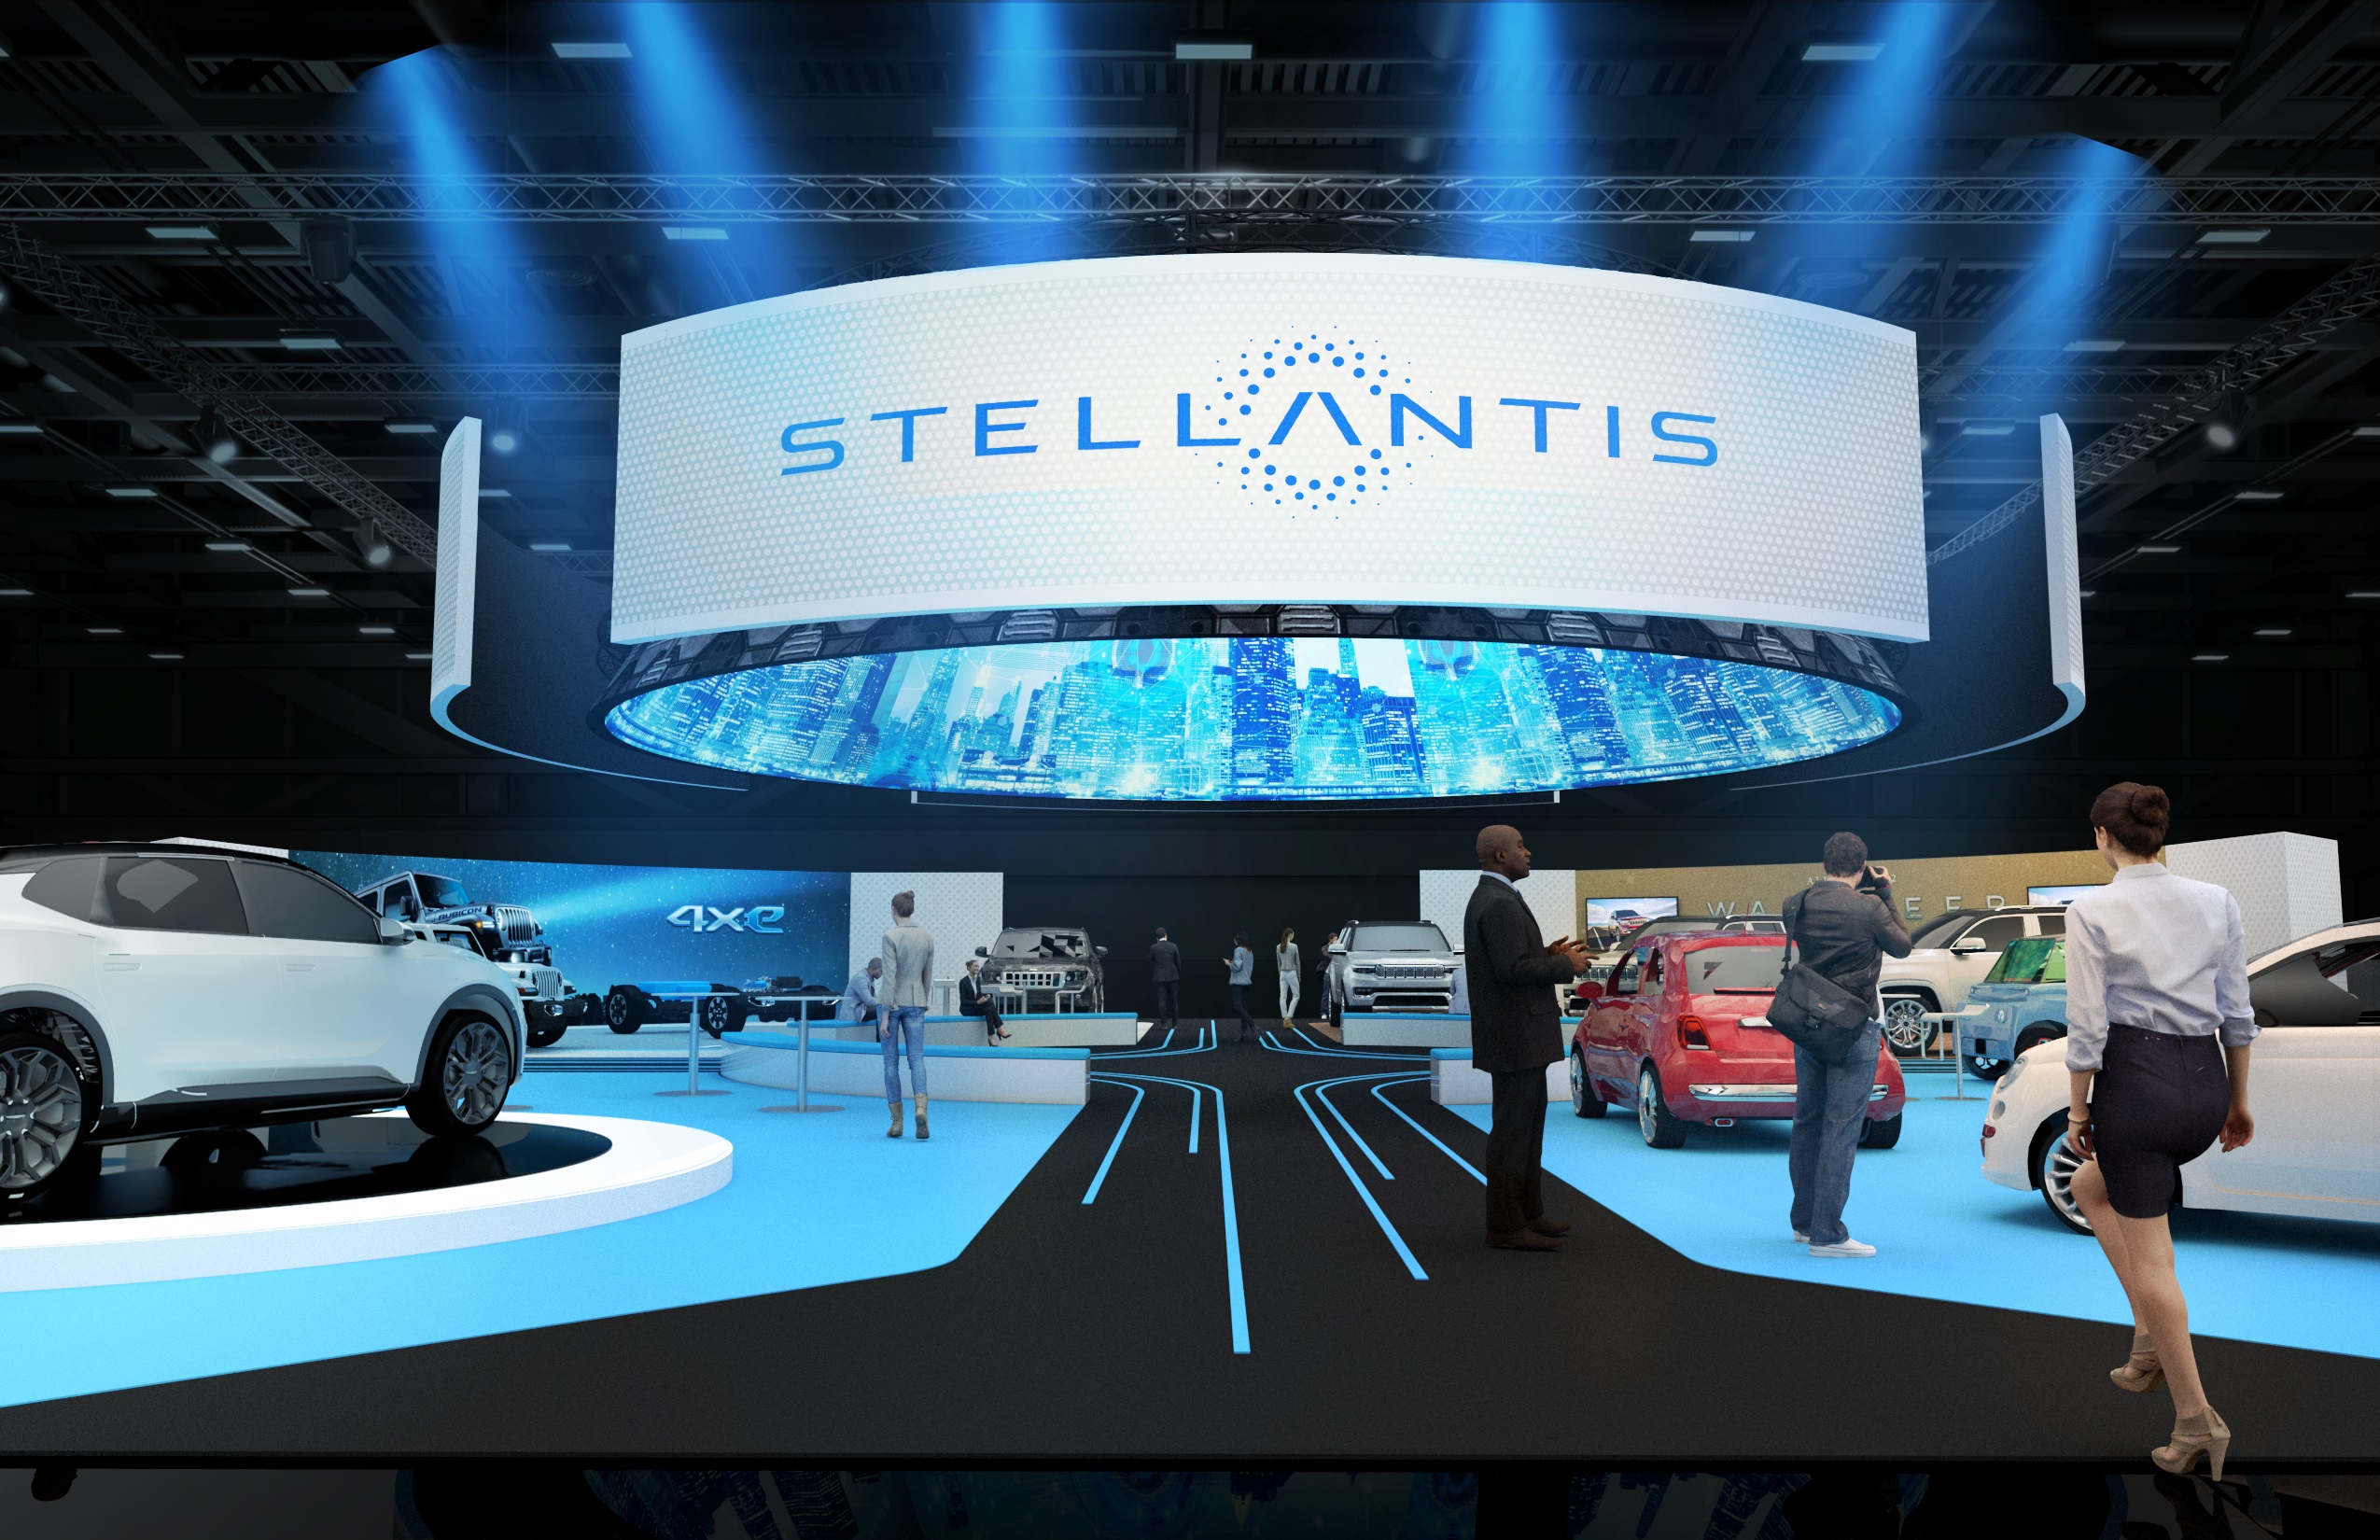 Stellantis Mexico records sales growth of 53%